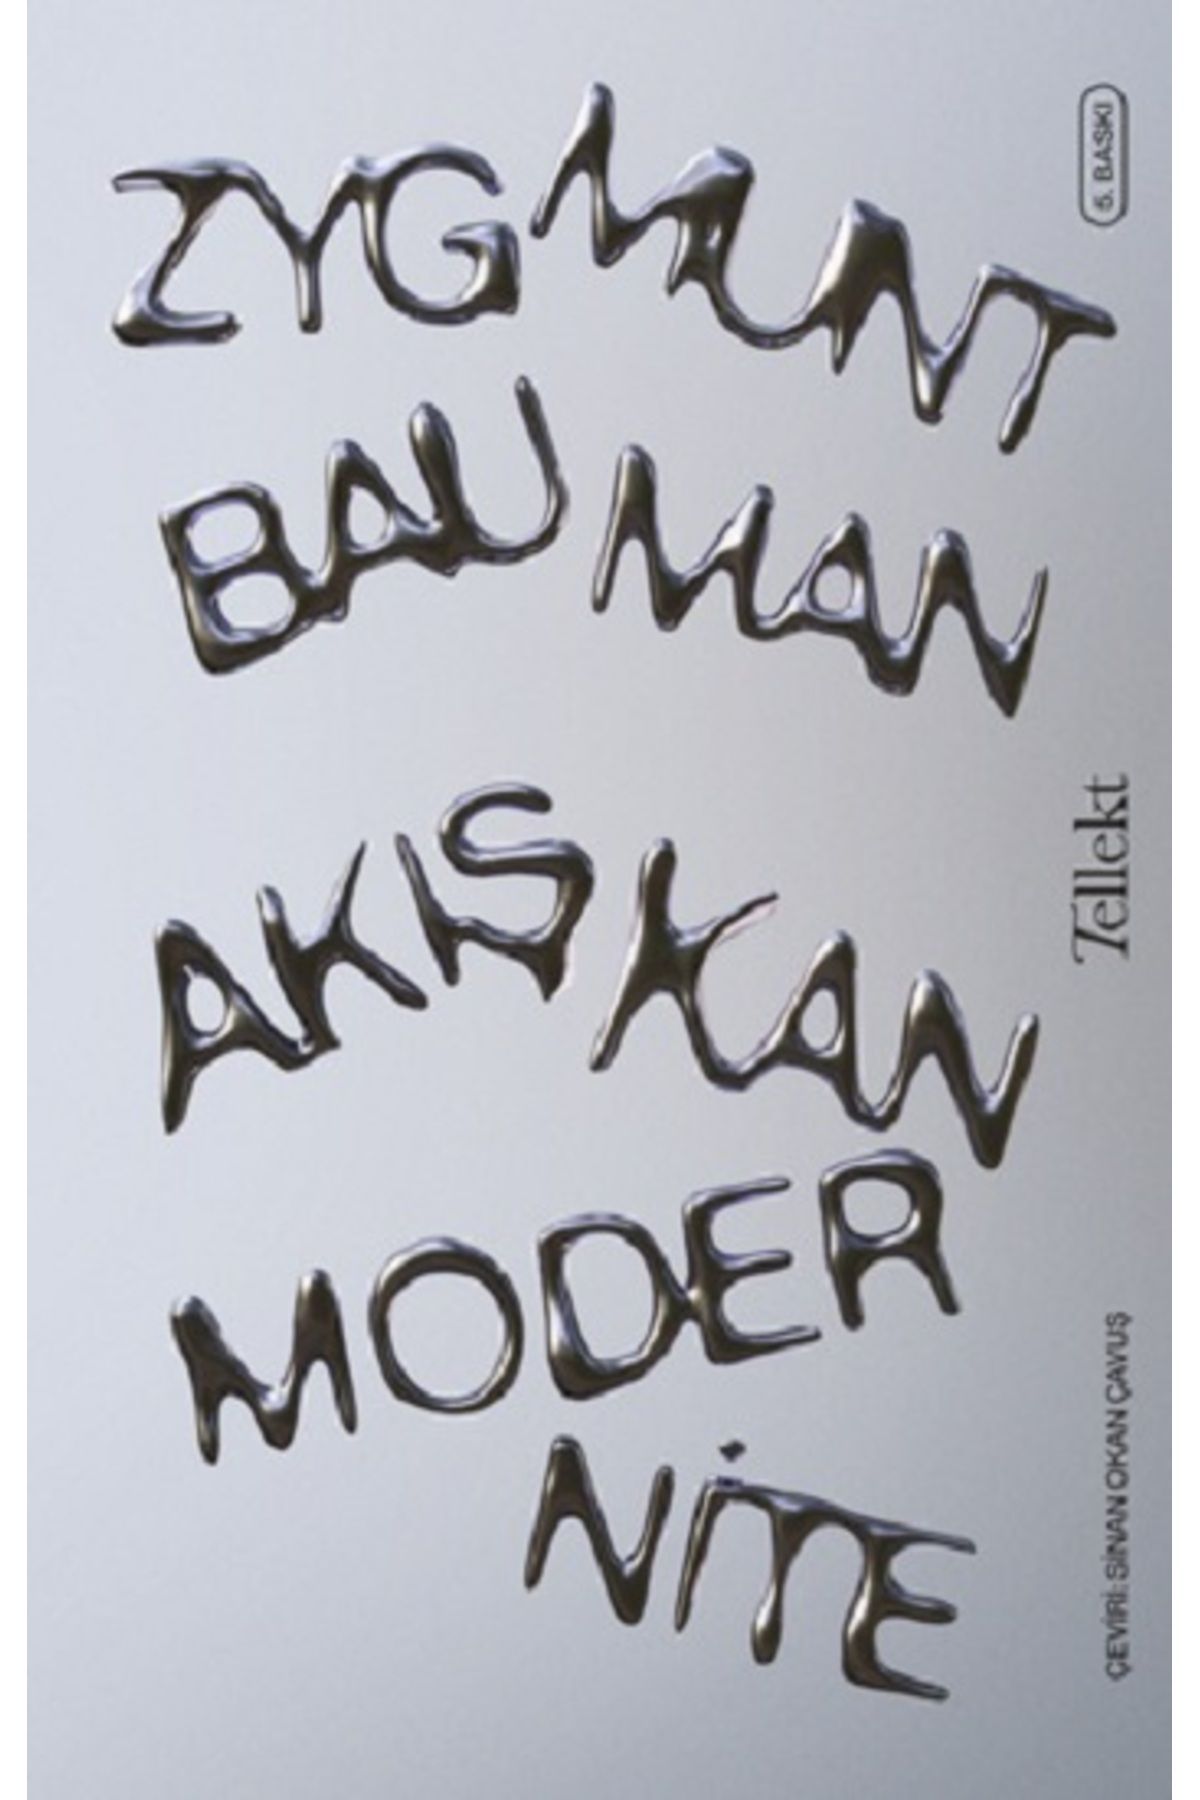 Tellekt Akışkan Modernite kitabı / Zygmunt Bauman / Tellekt